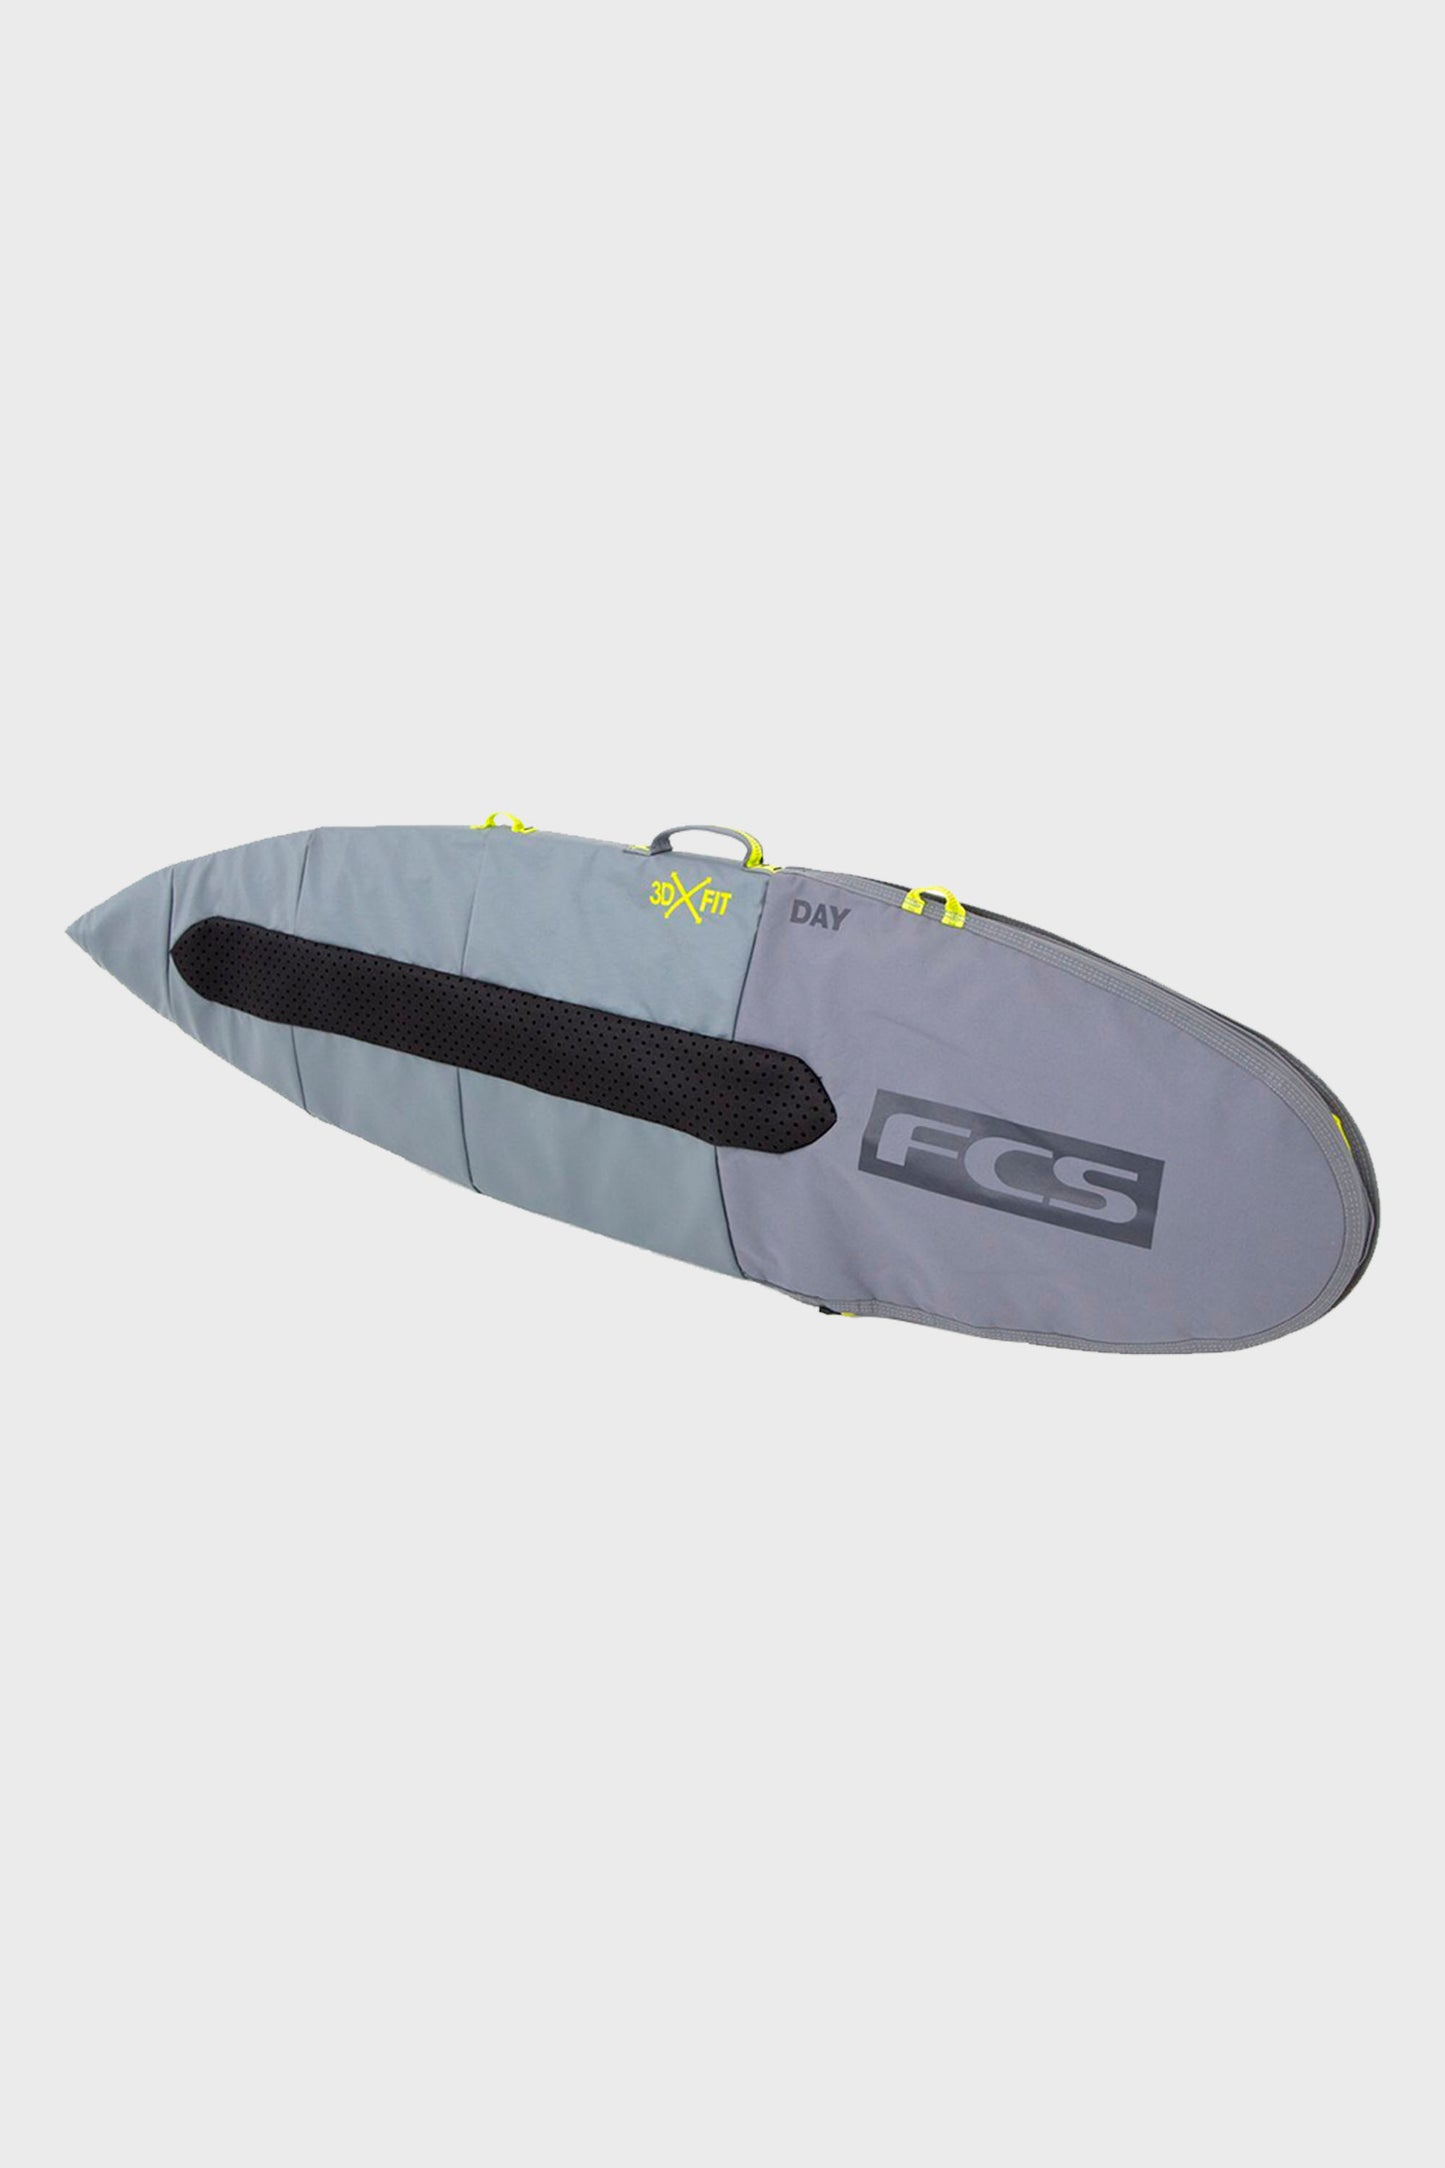 
                  
                        Pukas-Surf-Shop-FCS-Boardbags-Day-all-purpose-5.6
                  
                